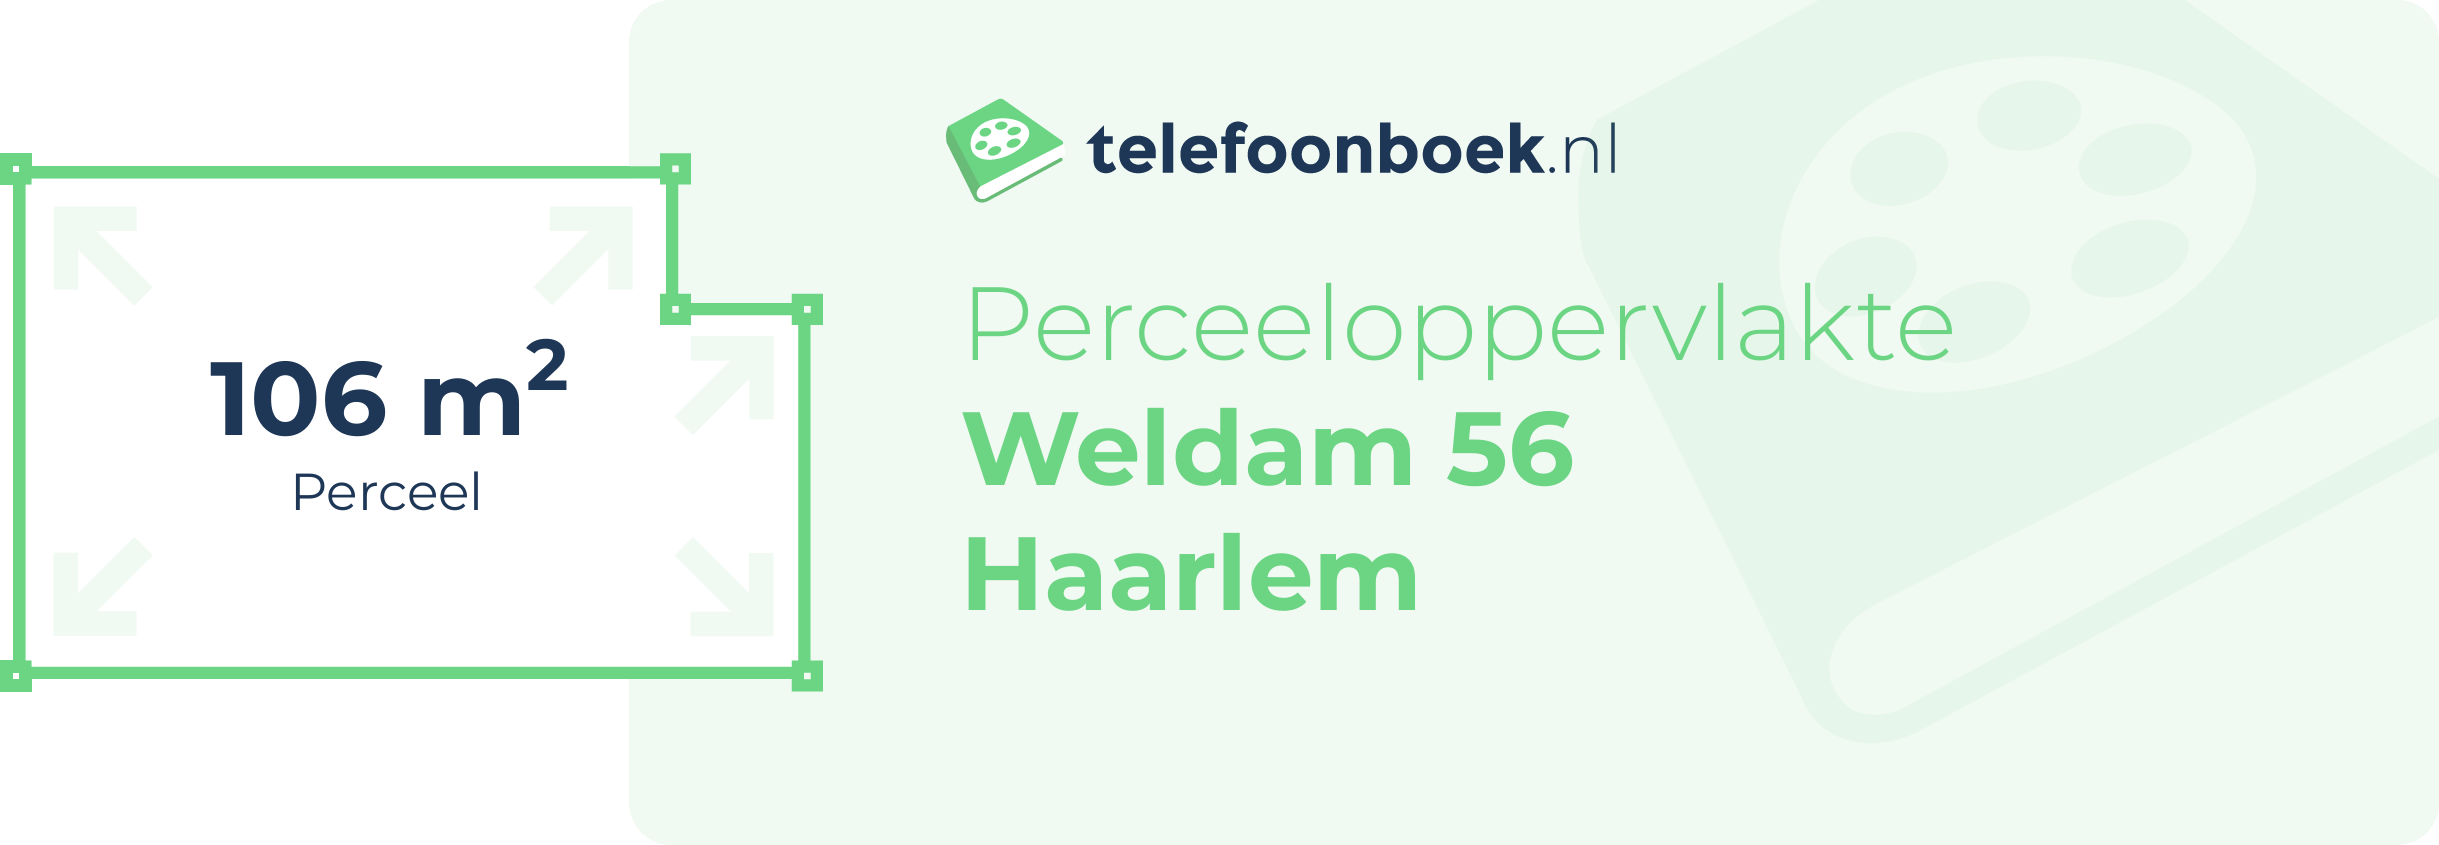 Perceeloppervlakte Weldam 56 Haarlem